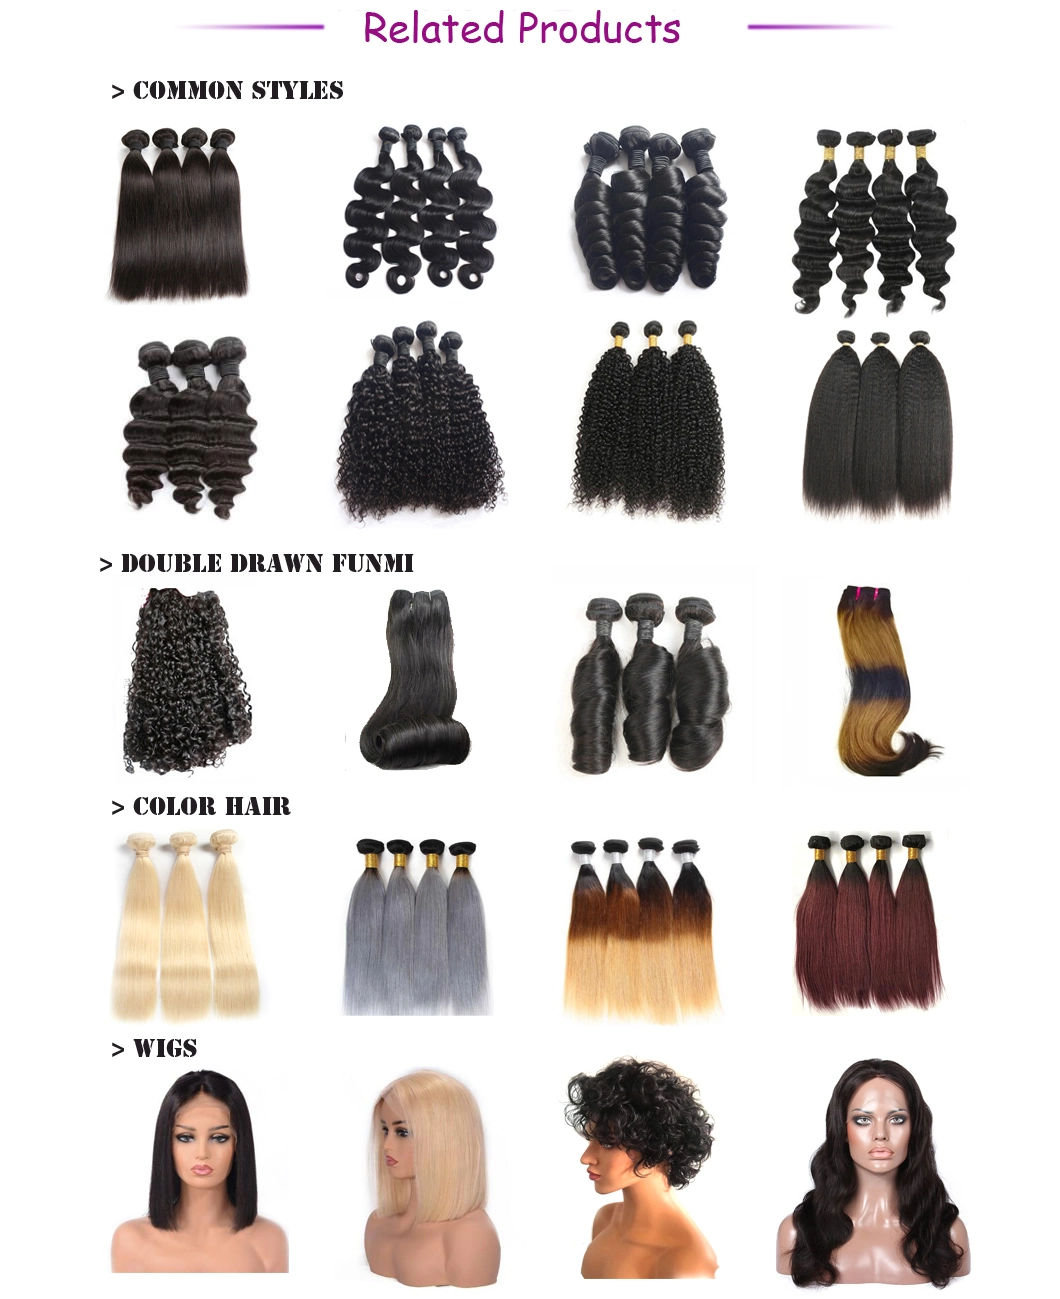 Pixie Curls 2/4 Color Short Wigs, 100 Human Hair Brown Pixie Wigs